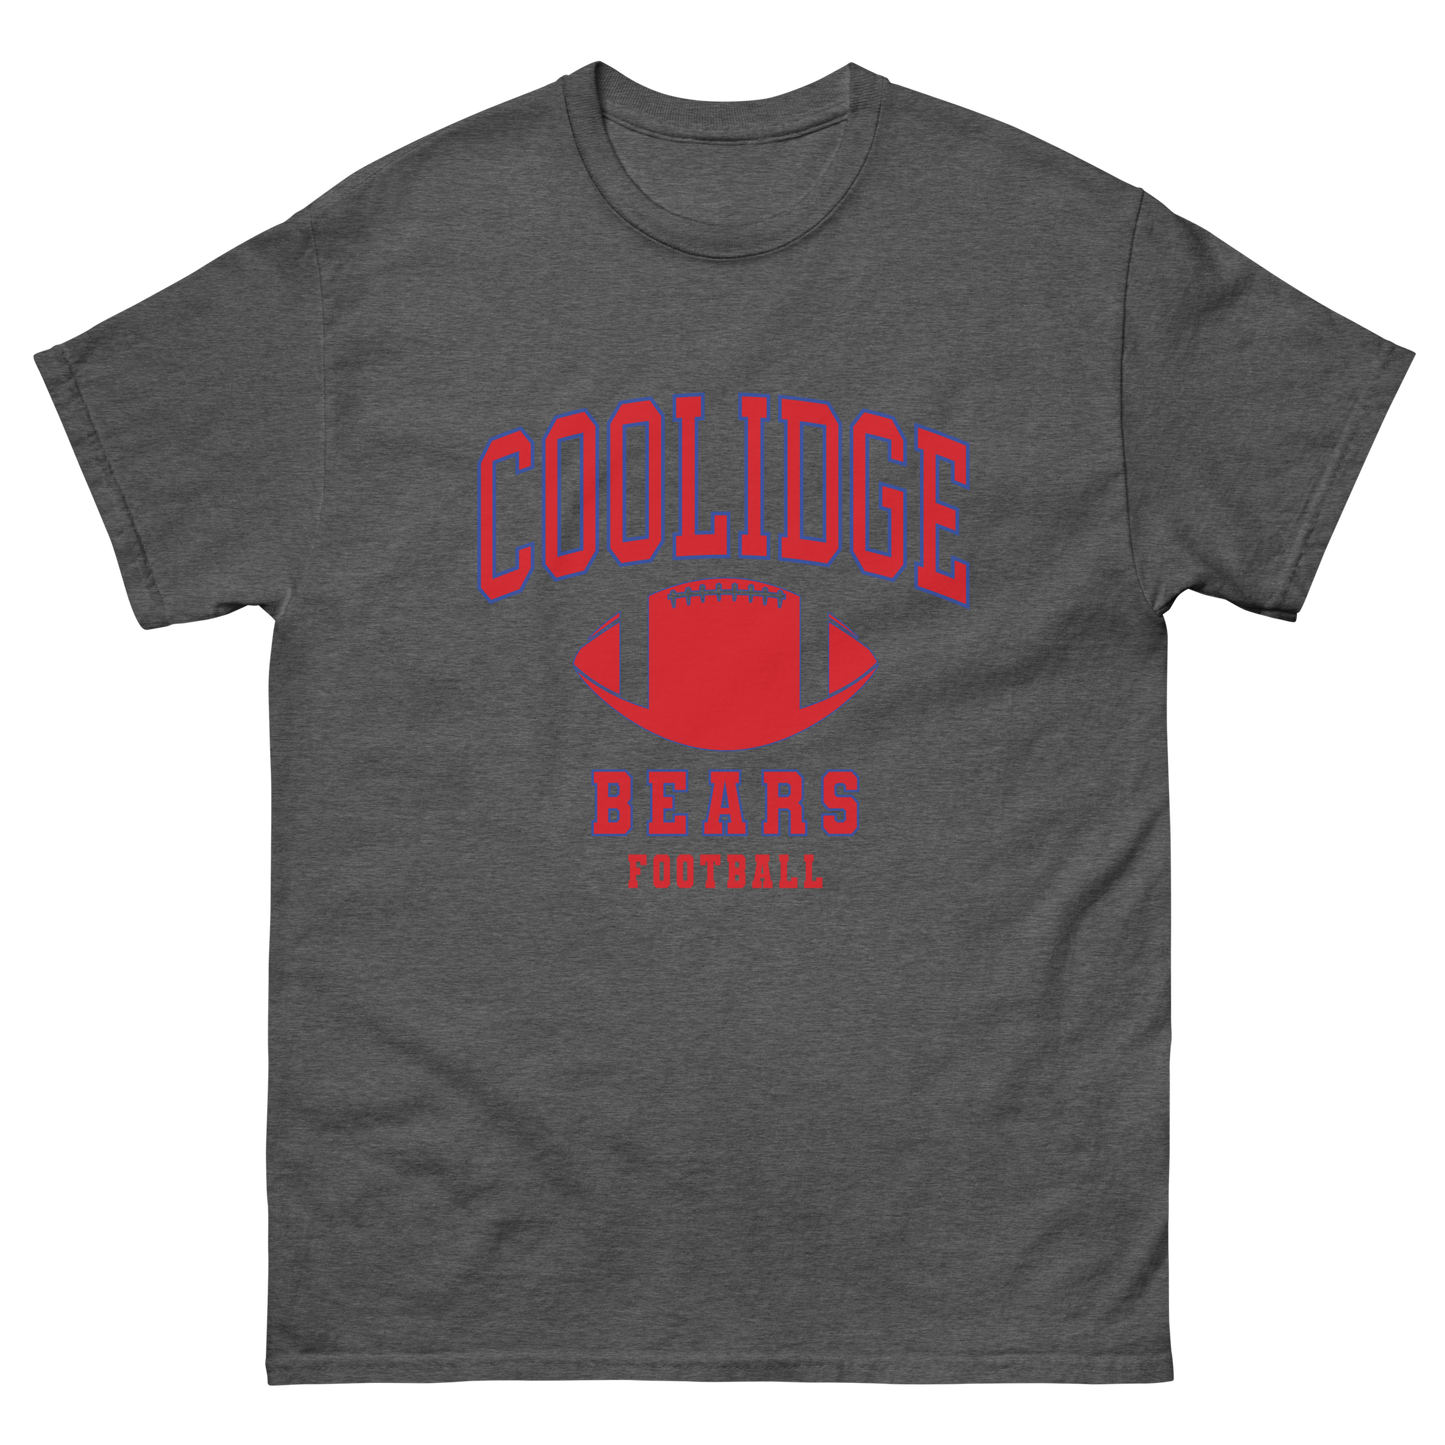 Coolidge Football classic tee